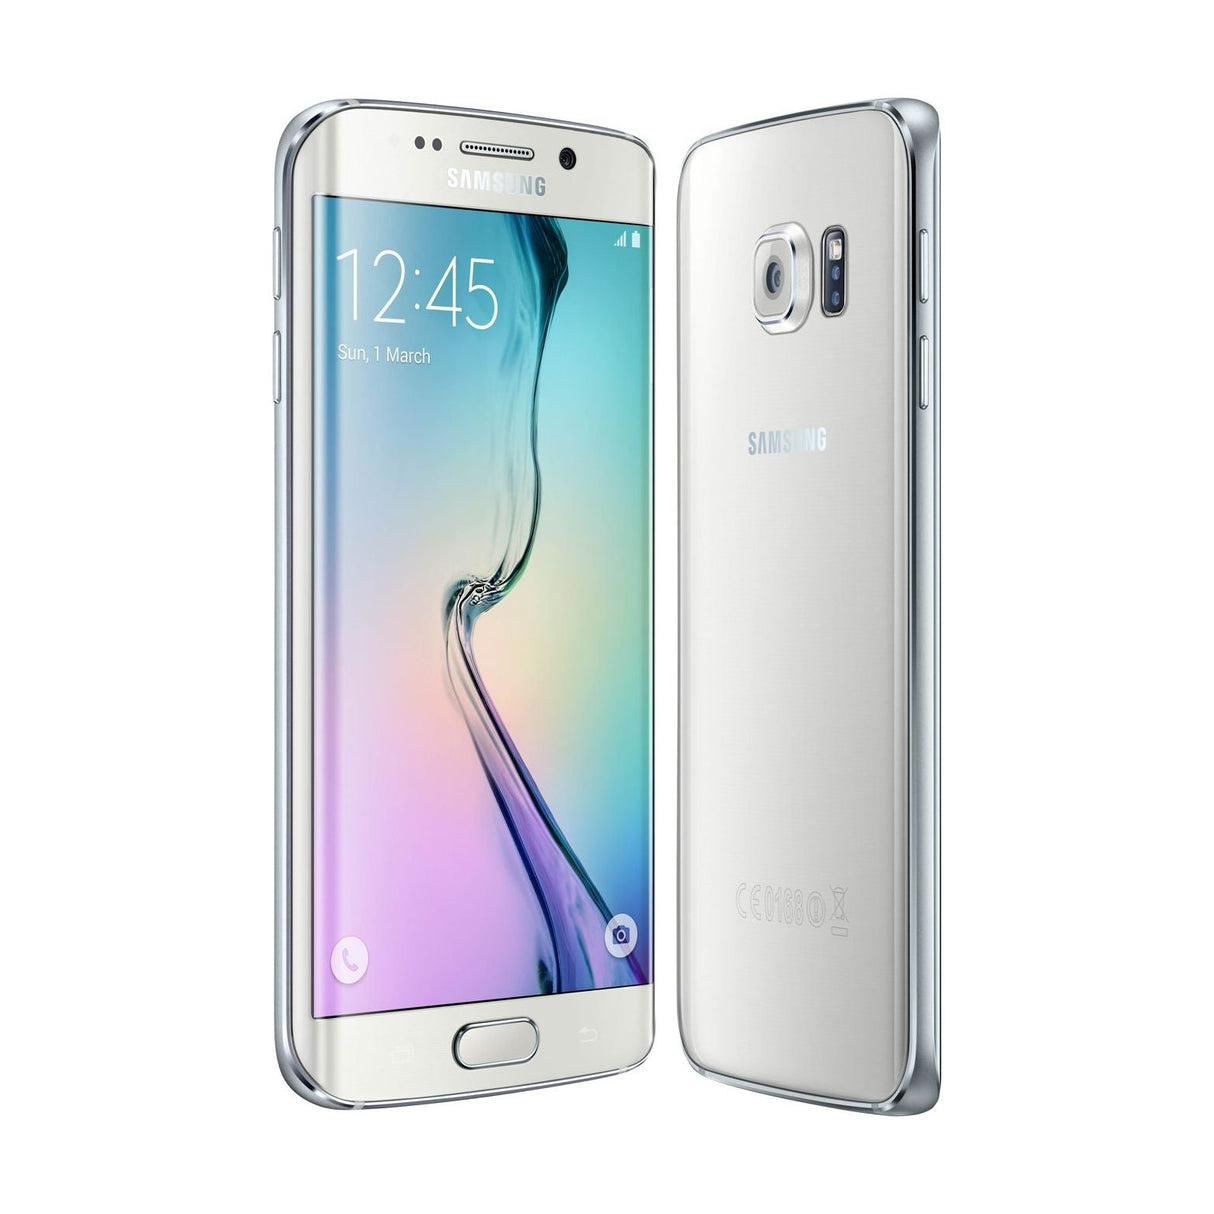 Samsung Galaxy S6 edge - 64 GB - White Pearl - Verizon - CDMA/GS